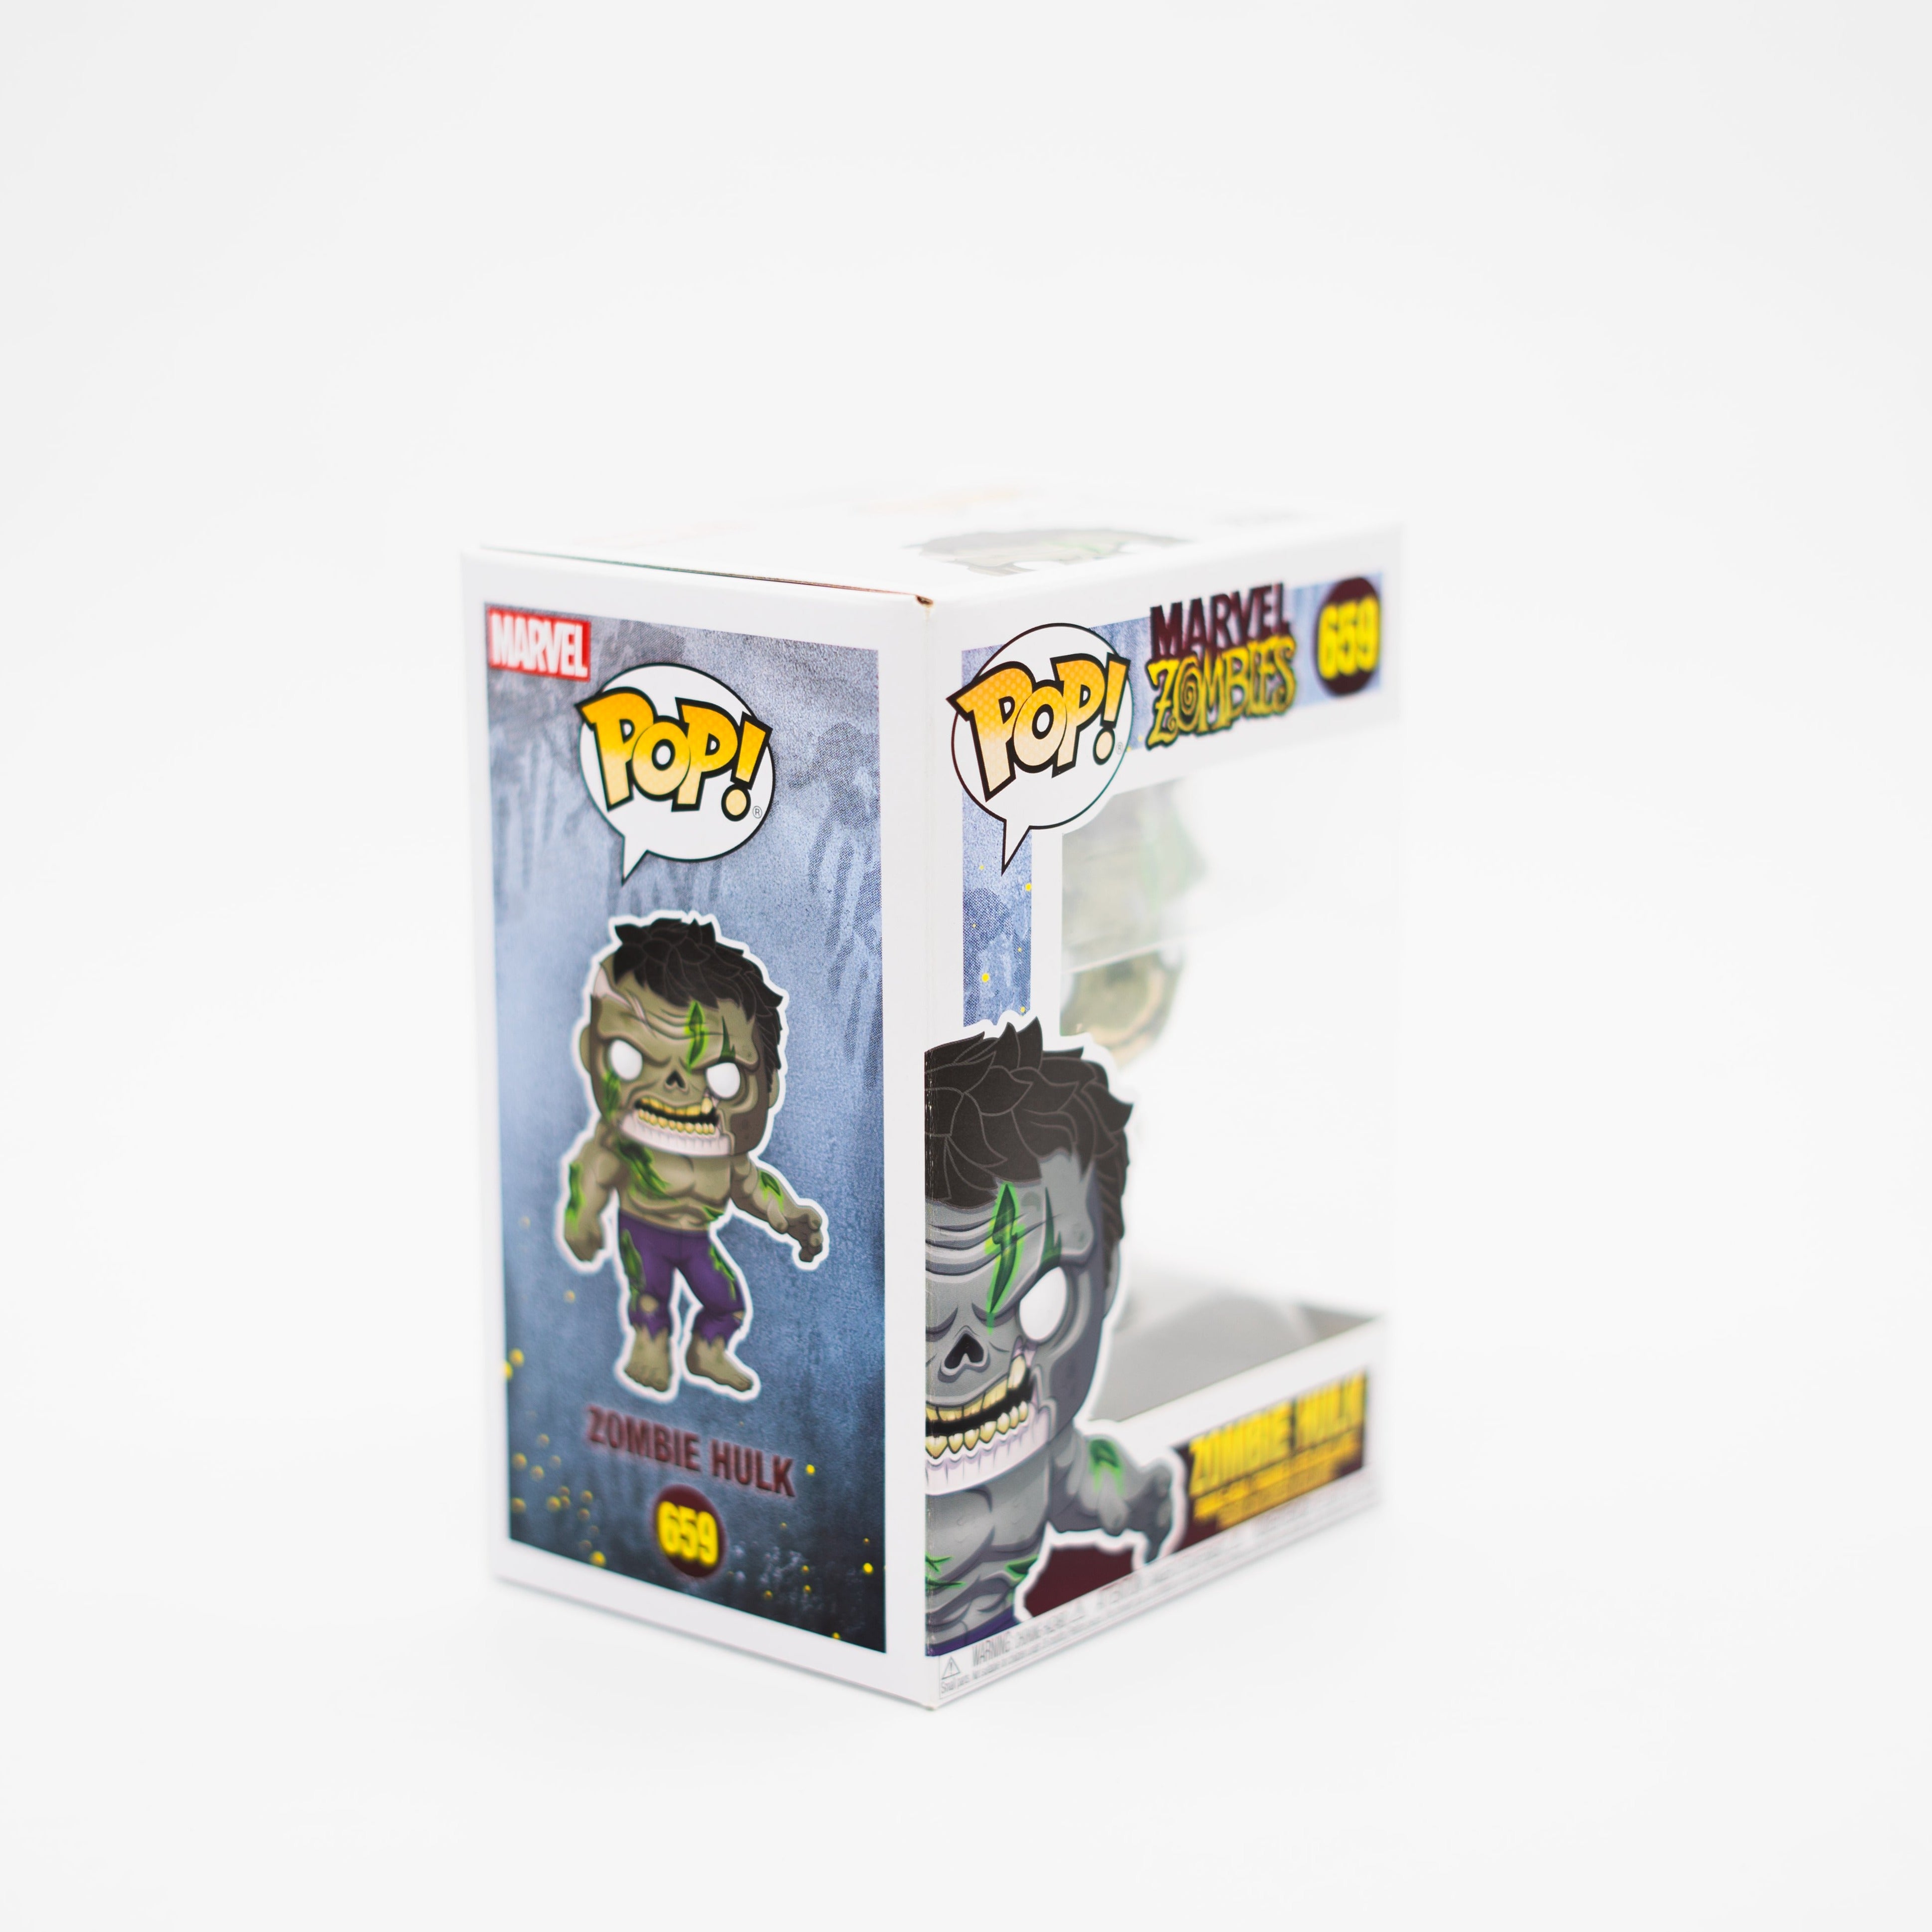 Funko Pop! Zombie Hulk #659